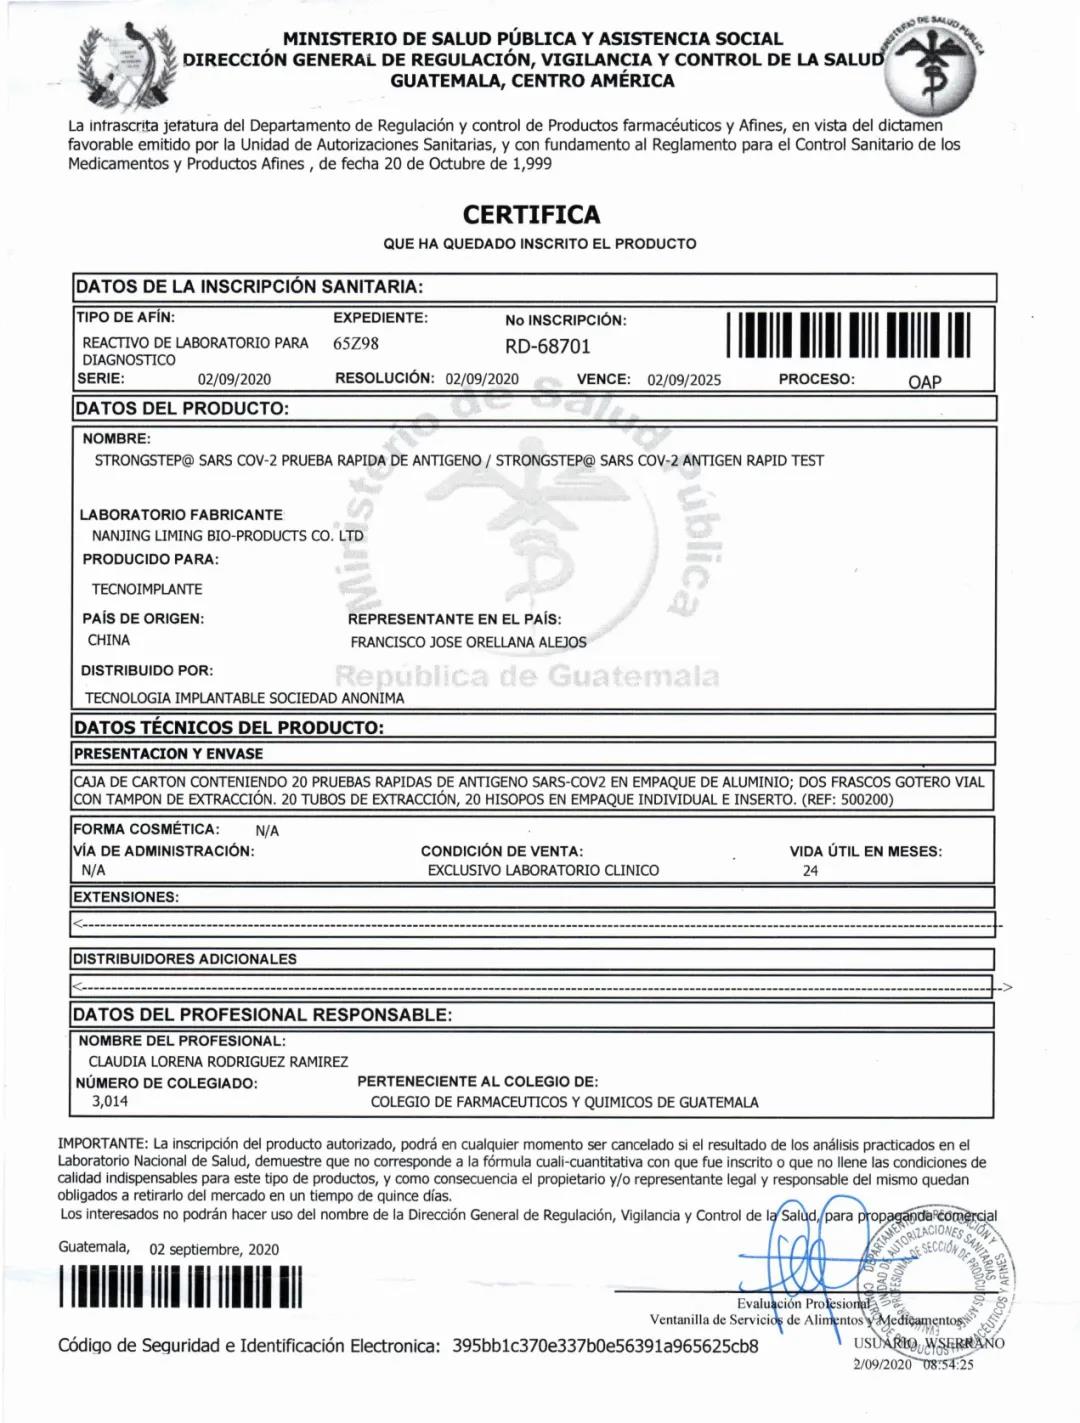 Guatemala certification of SARS-CoV-2 Antigen Rapid Test Kit